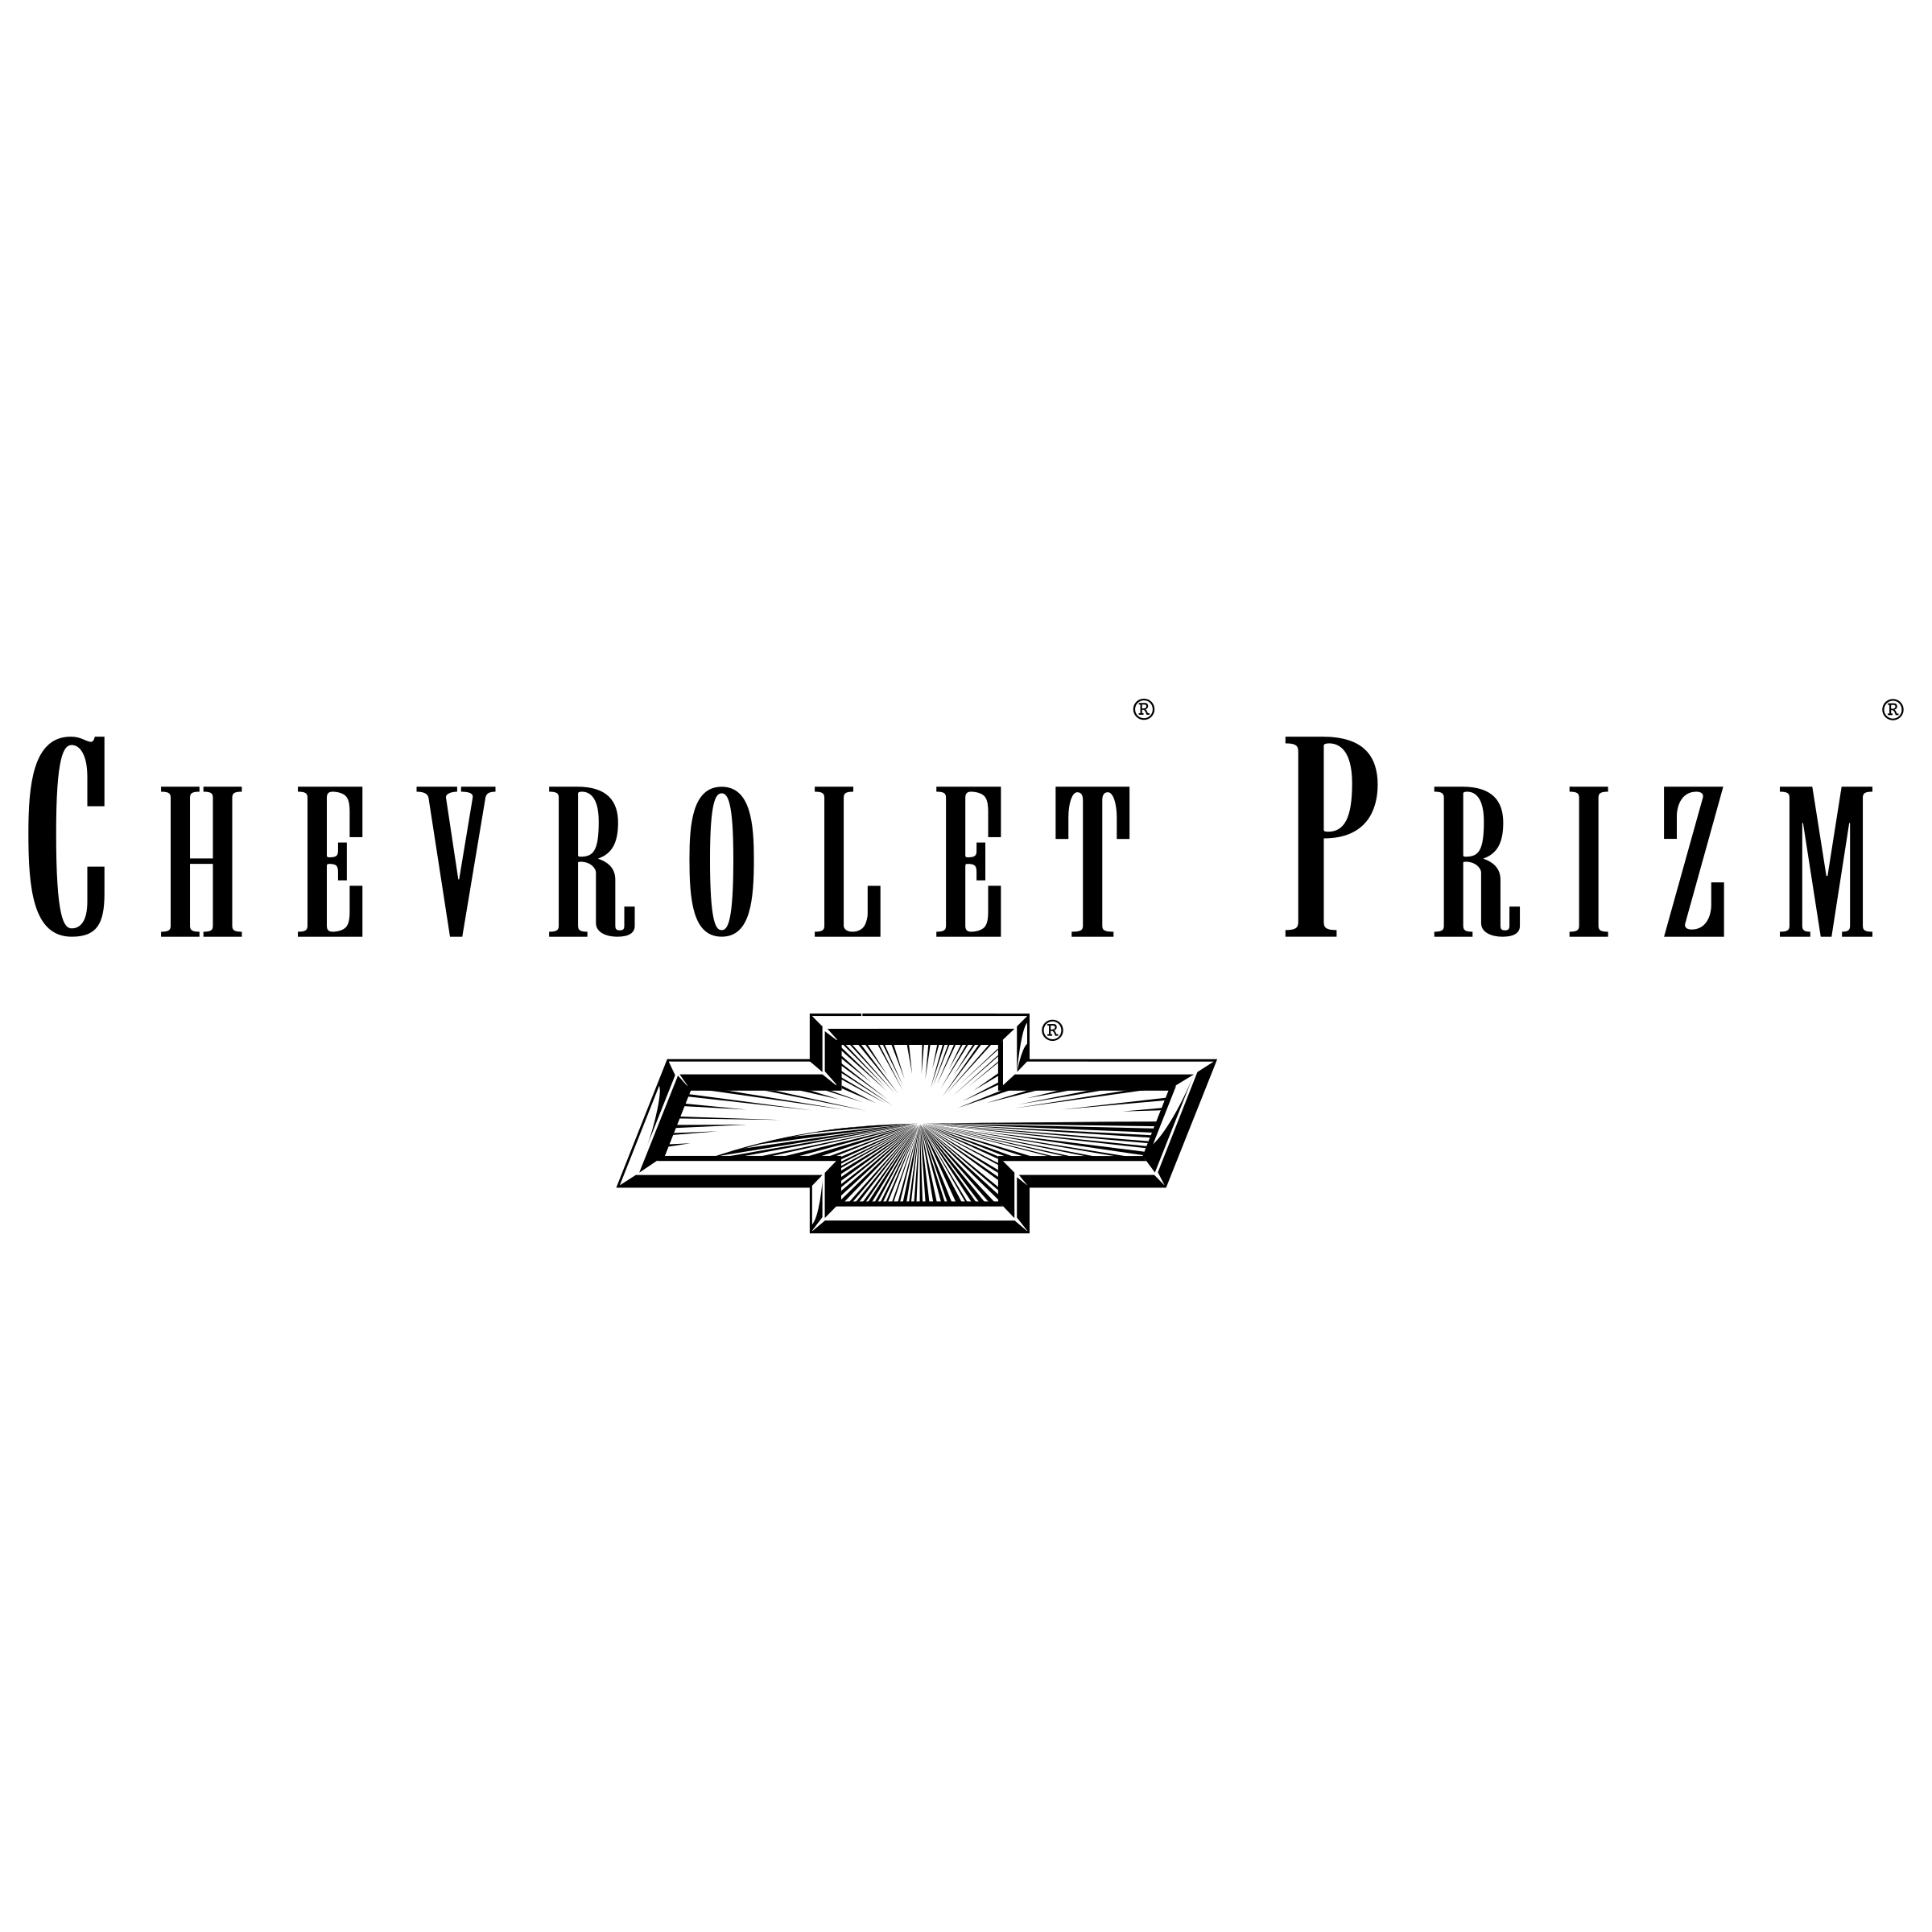 Prizm Logo - Chevrolet Prizm Logo PNG Transparent & SVG Vector - Freebie Supply